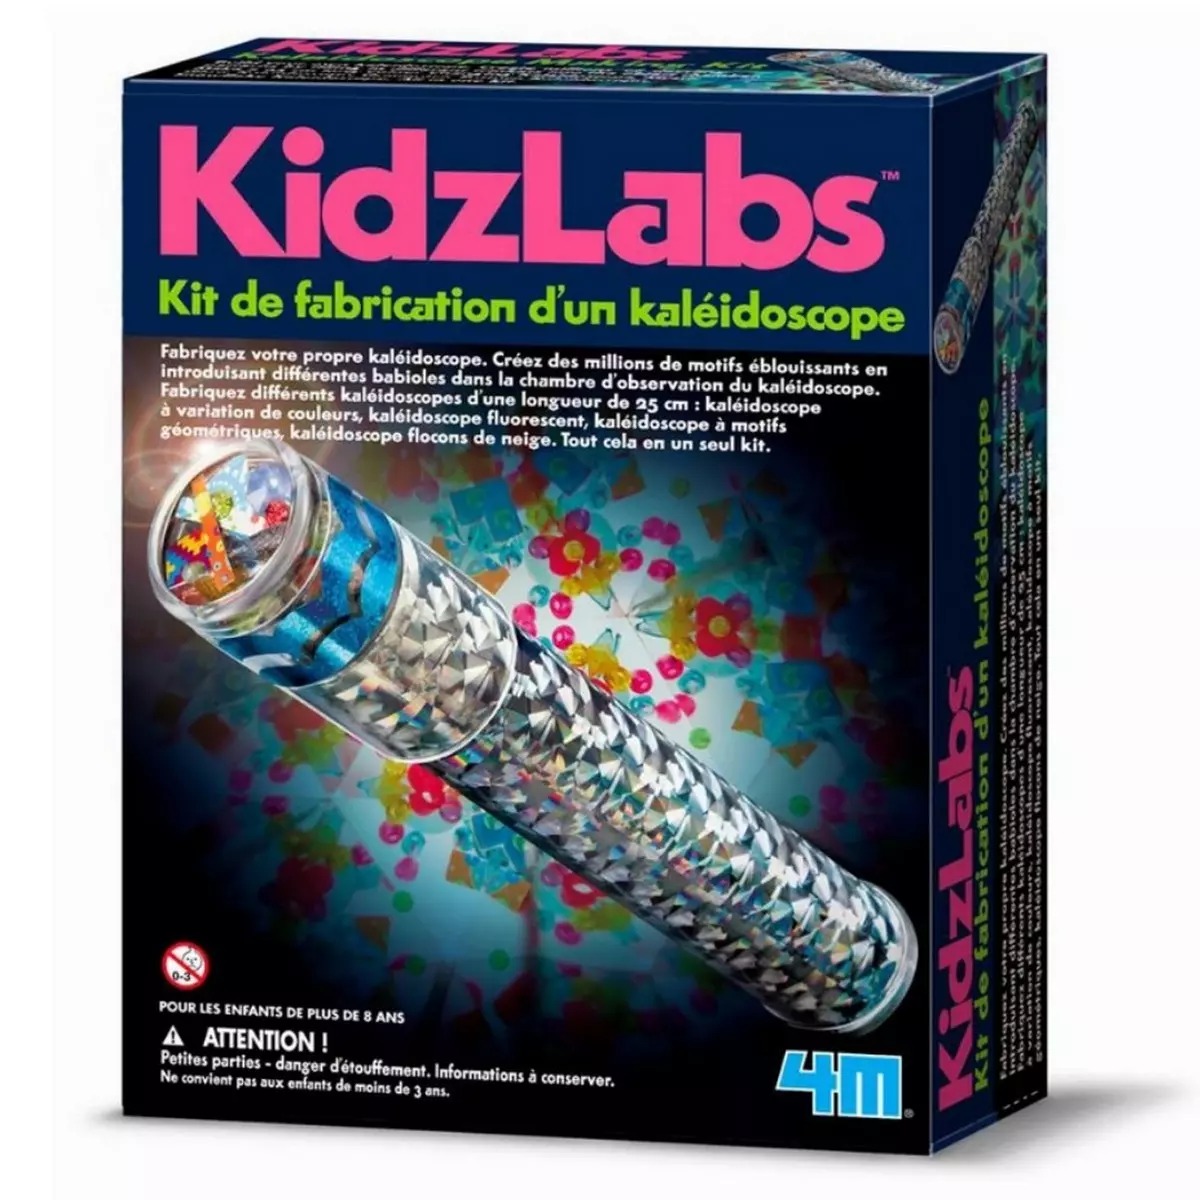 4m-kidslabs-kit-de-fabrication-k